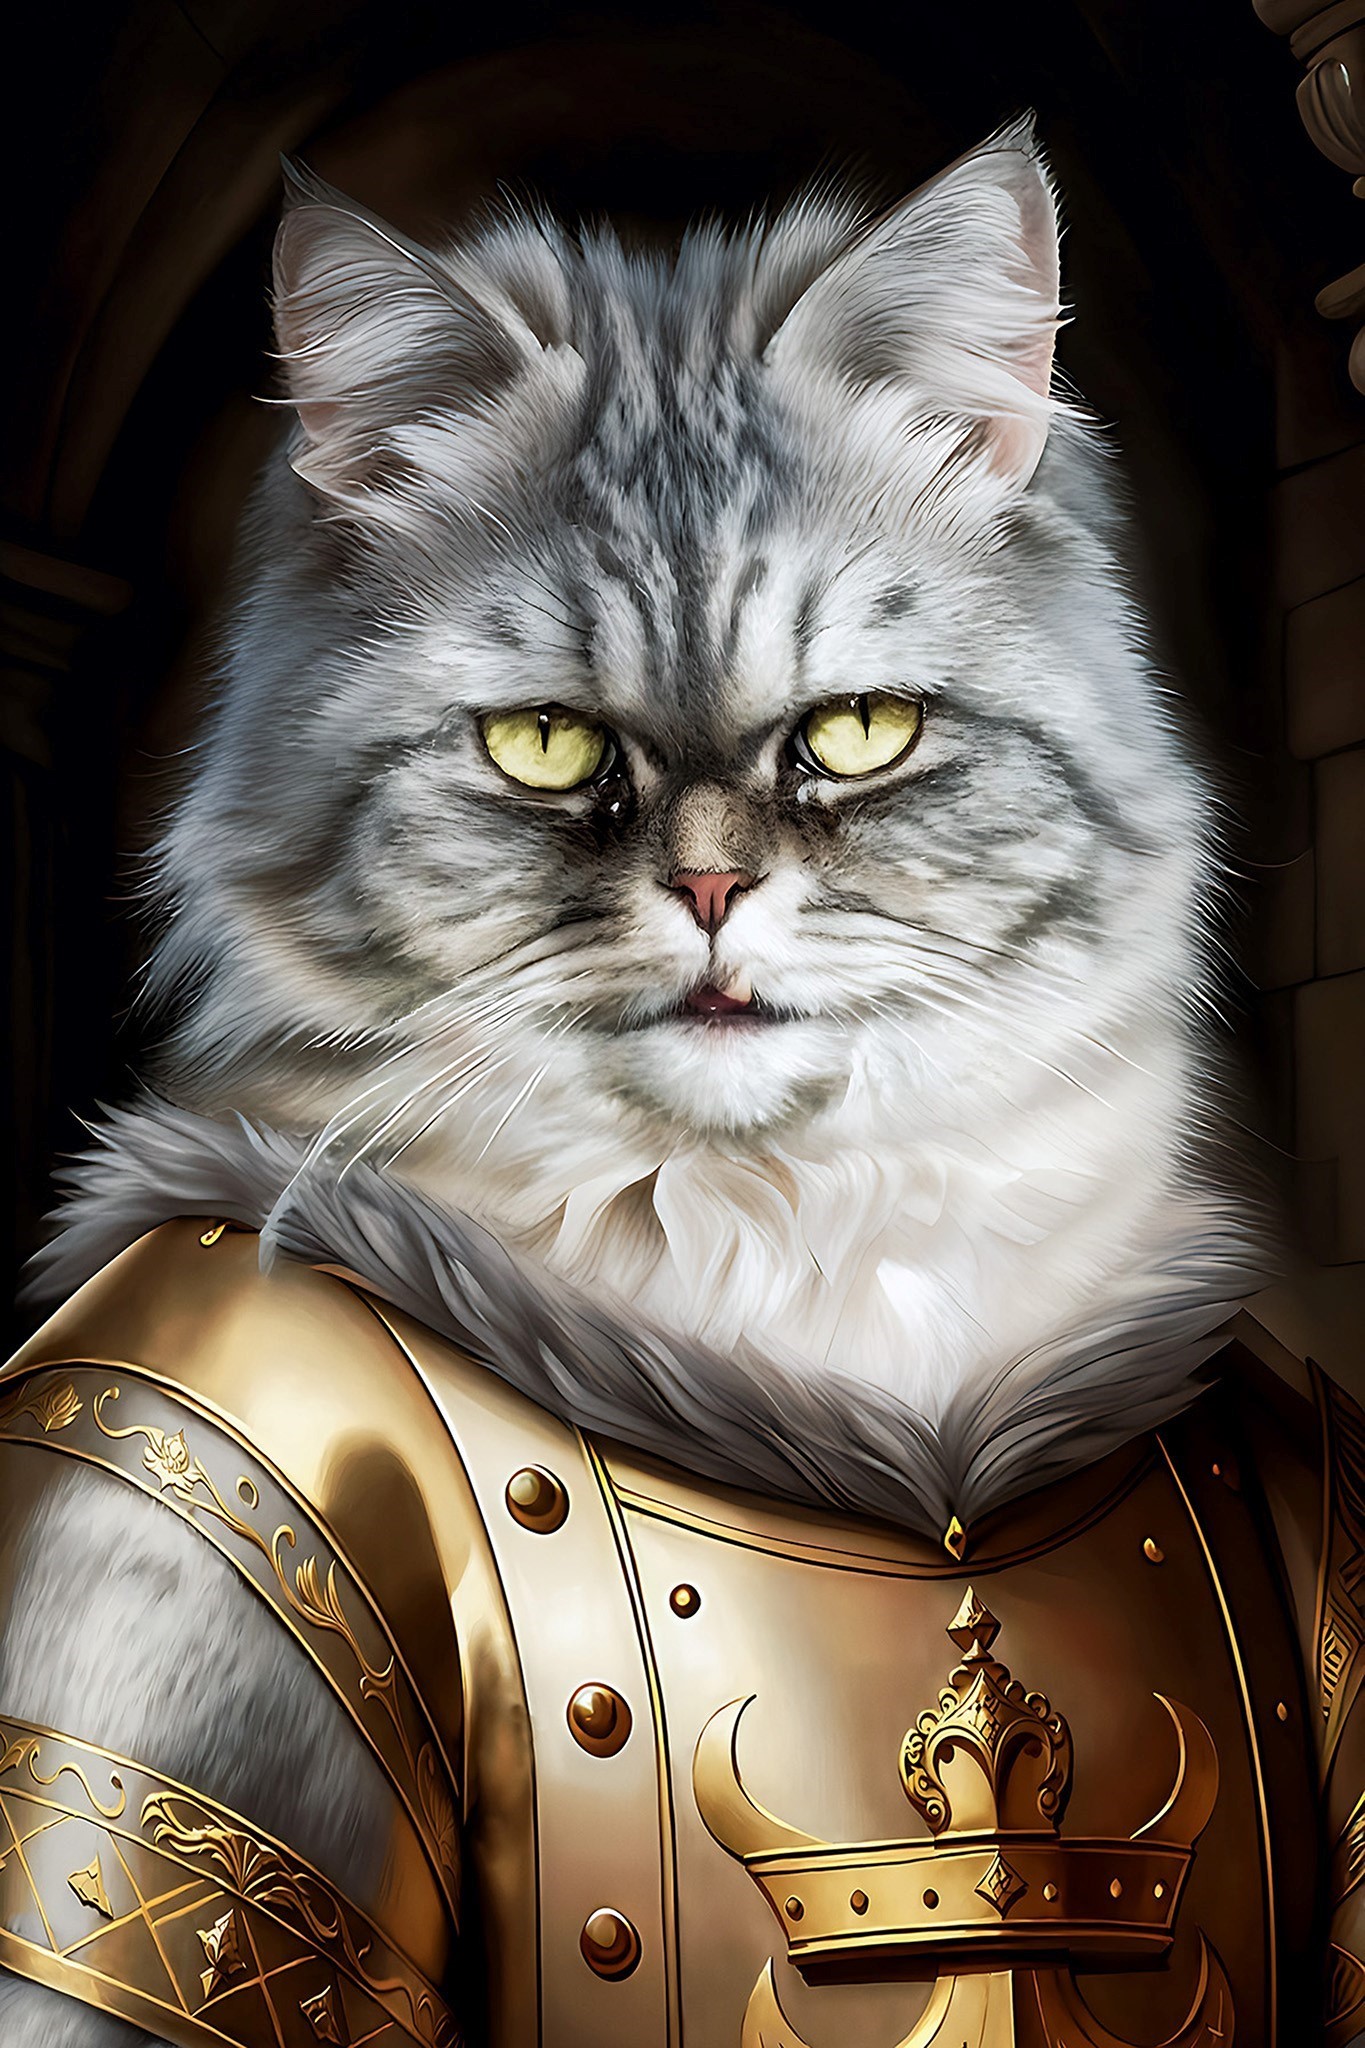 Knight cat portrait